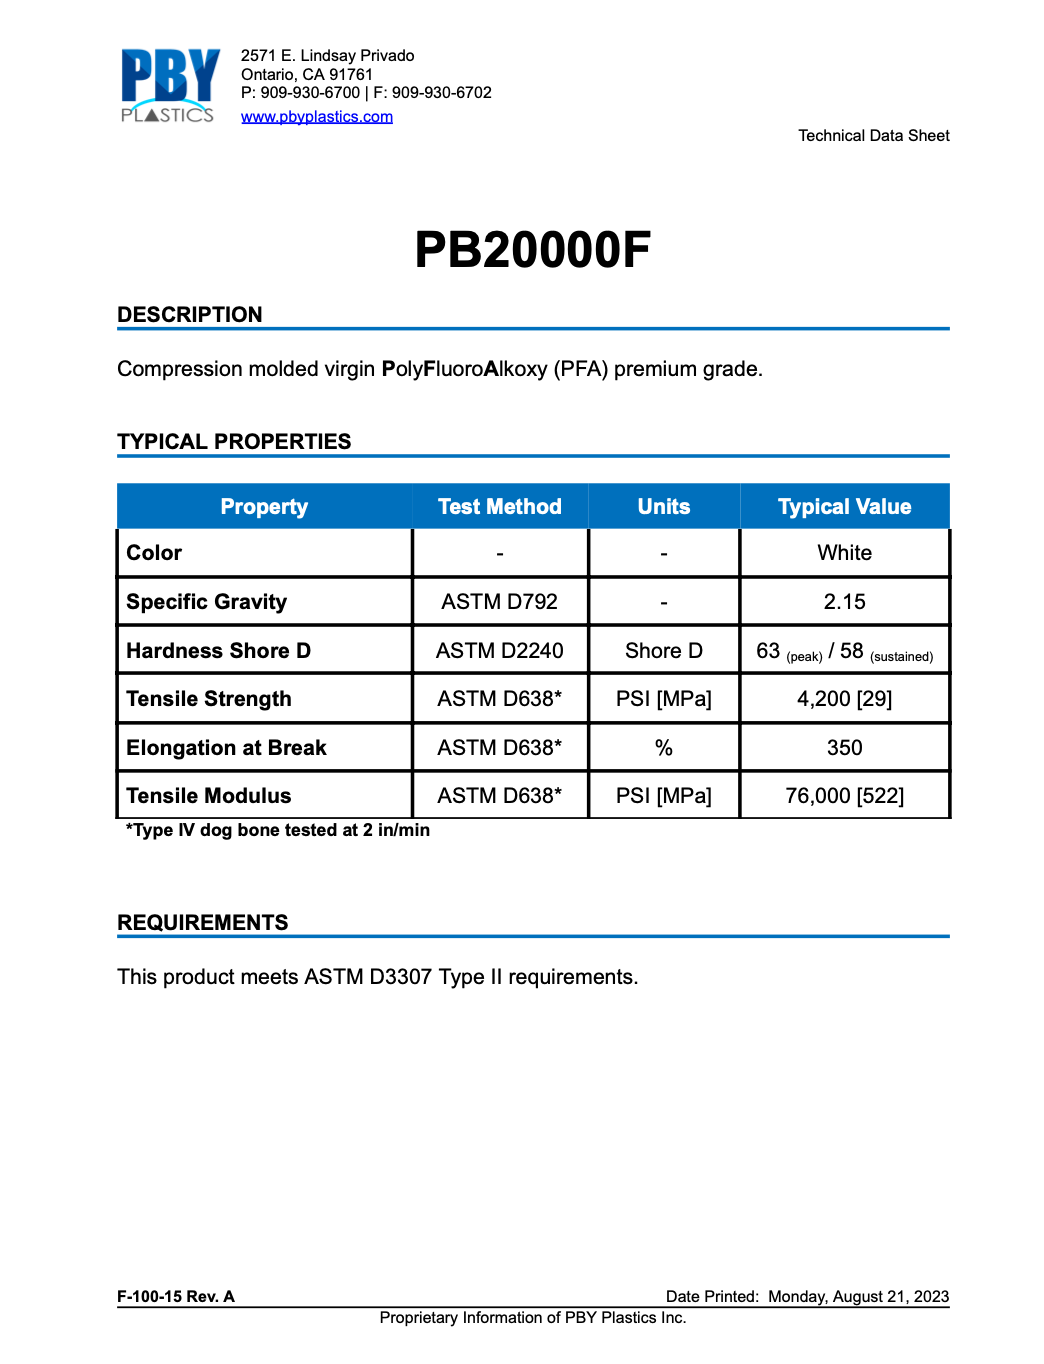 PB20000F-Aug21-Thumbnail